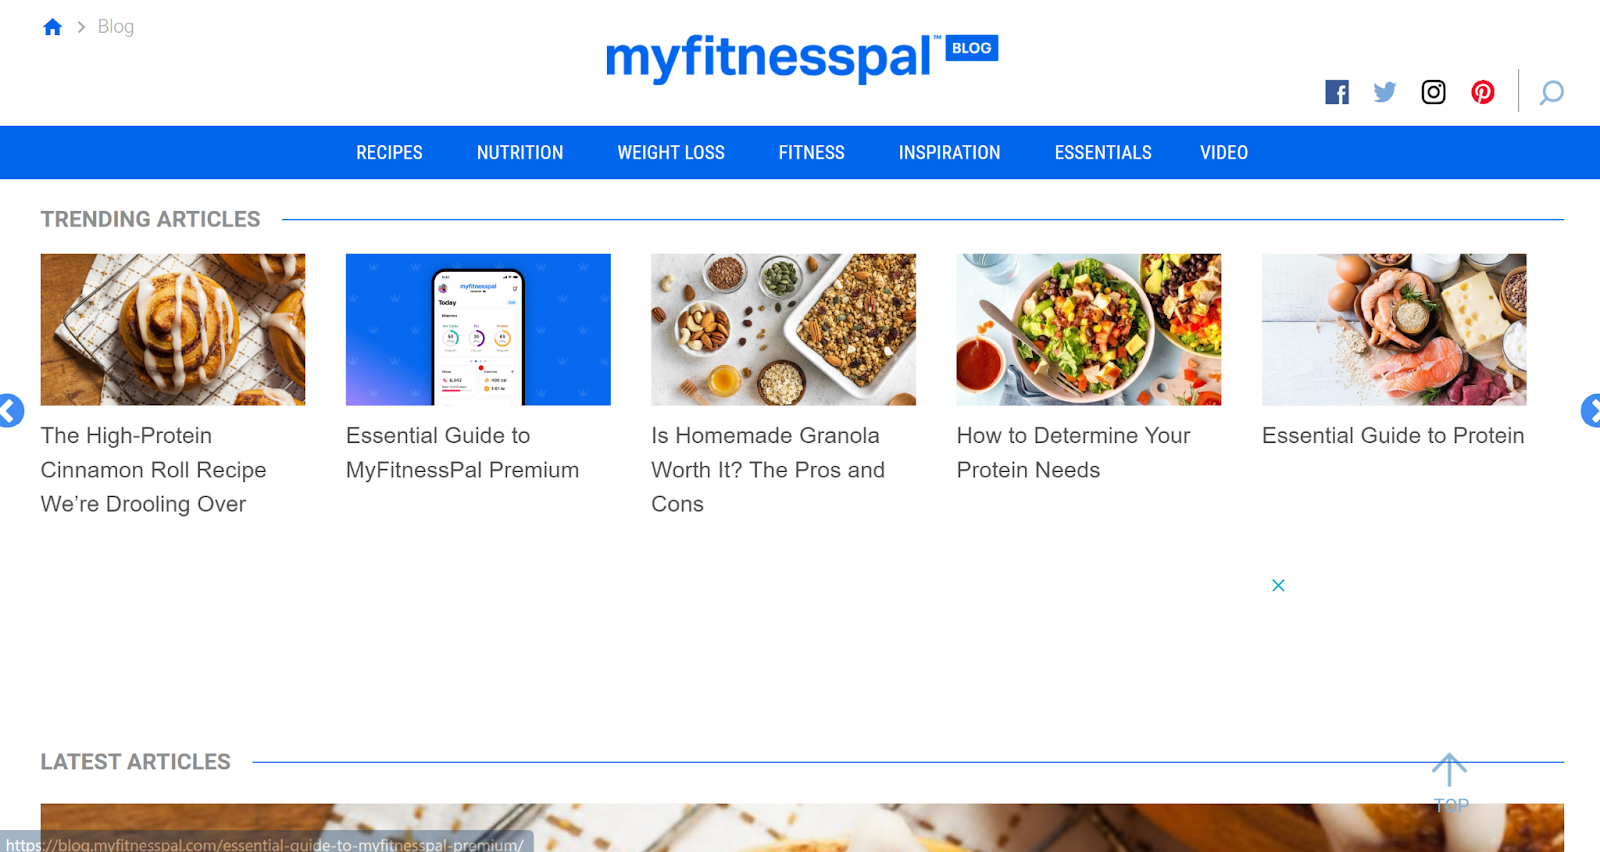 MyFitnessPal - Blog Homepage